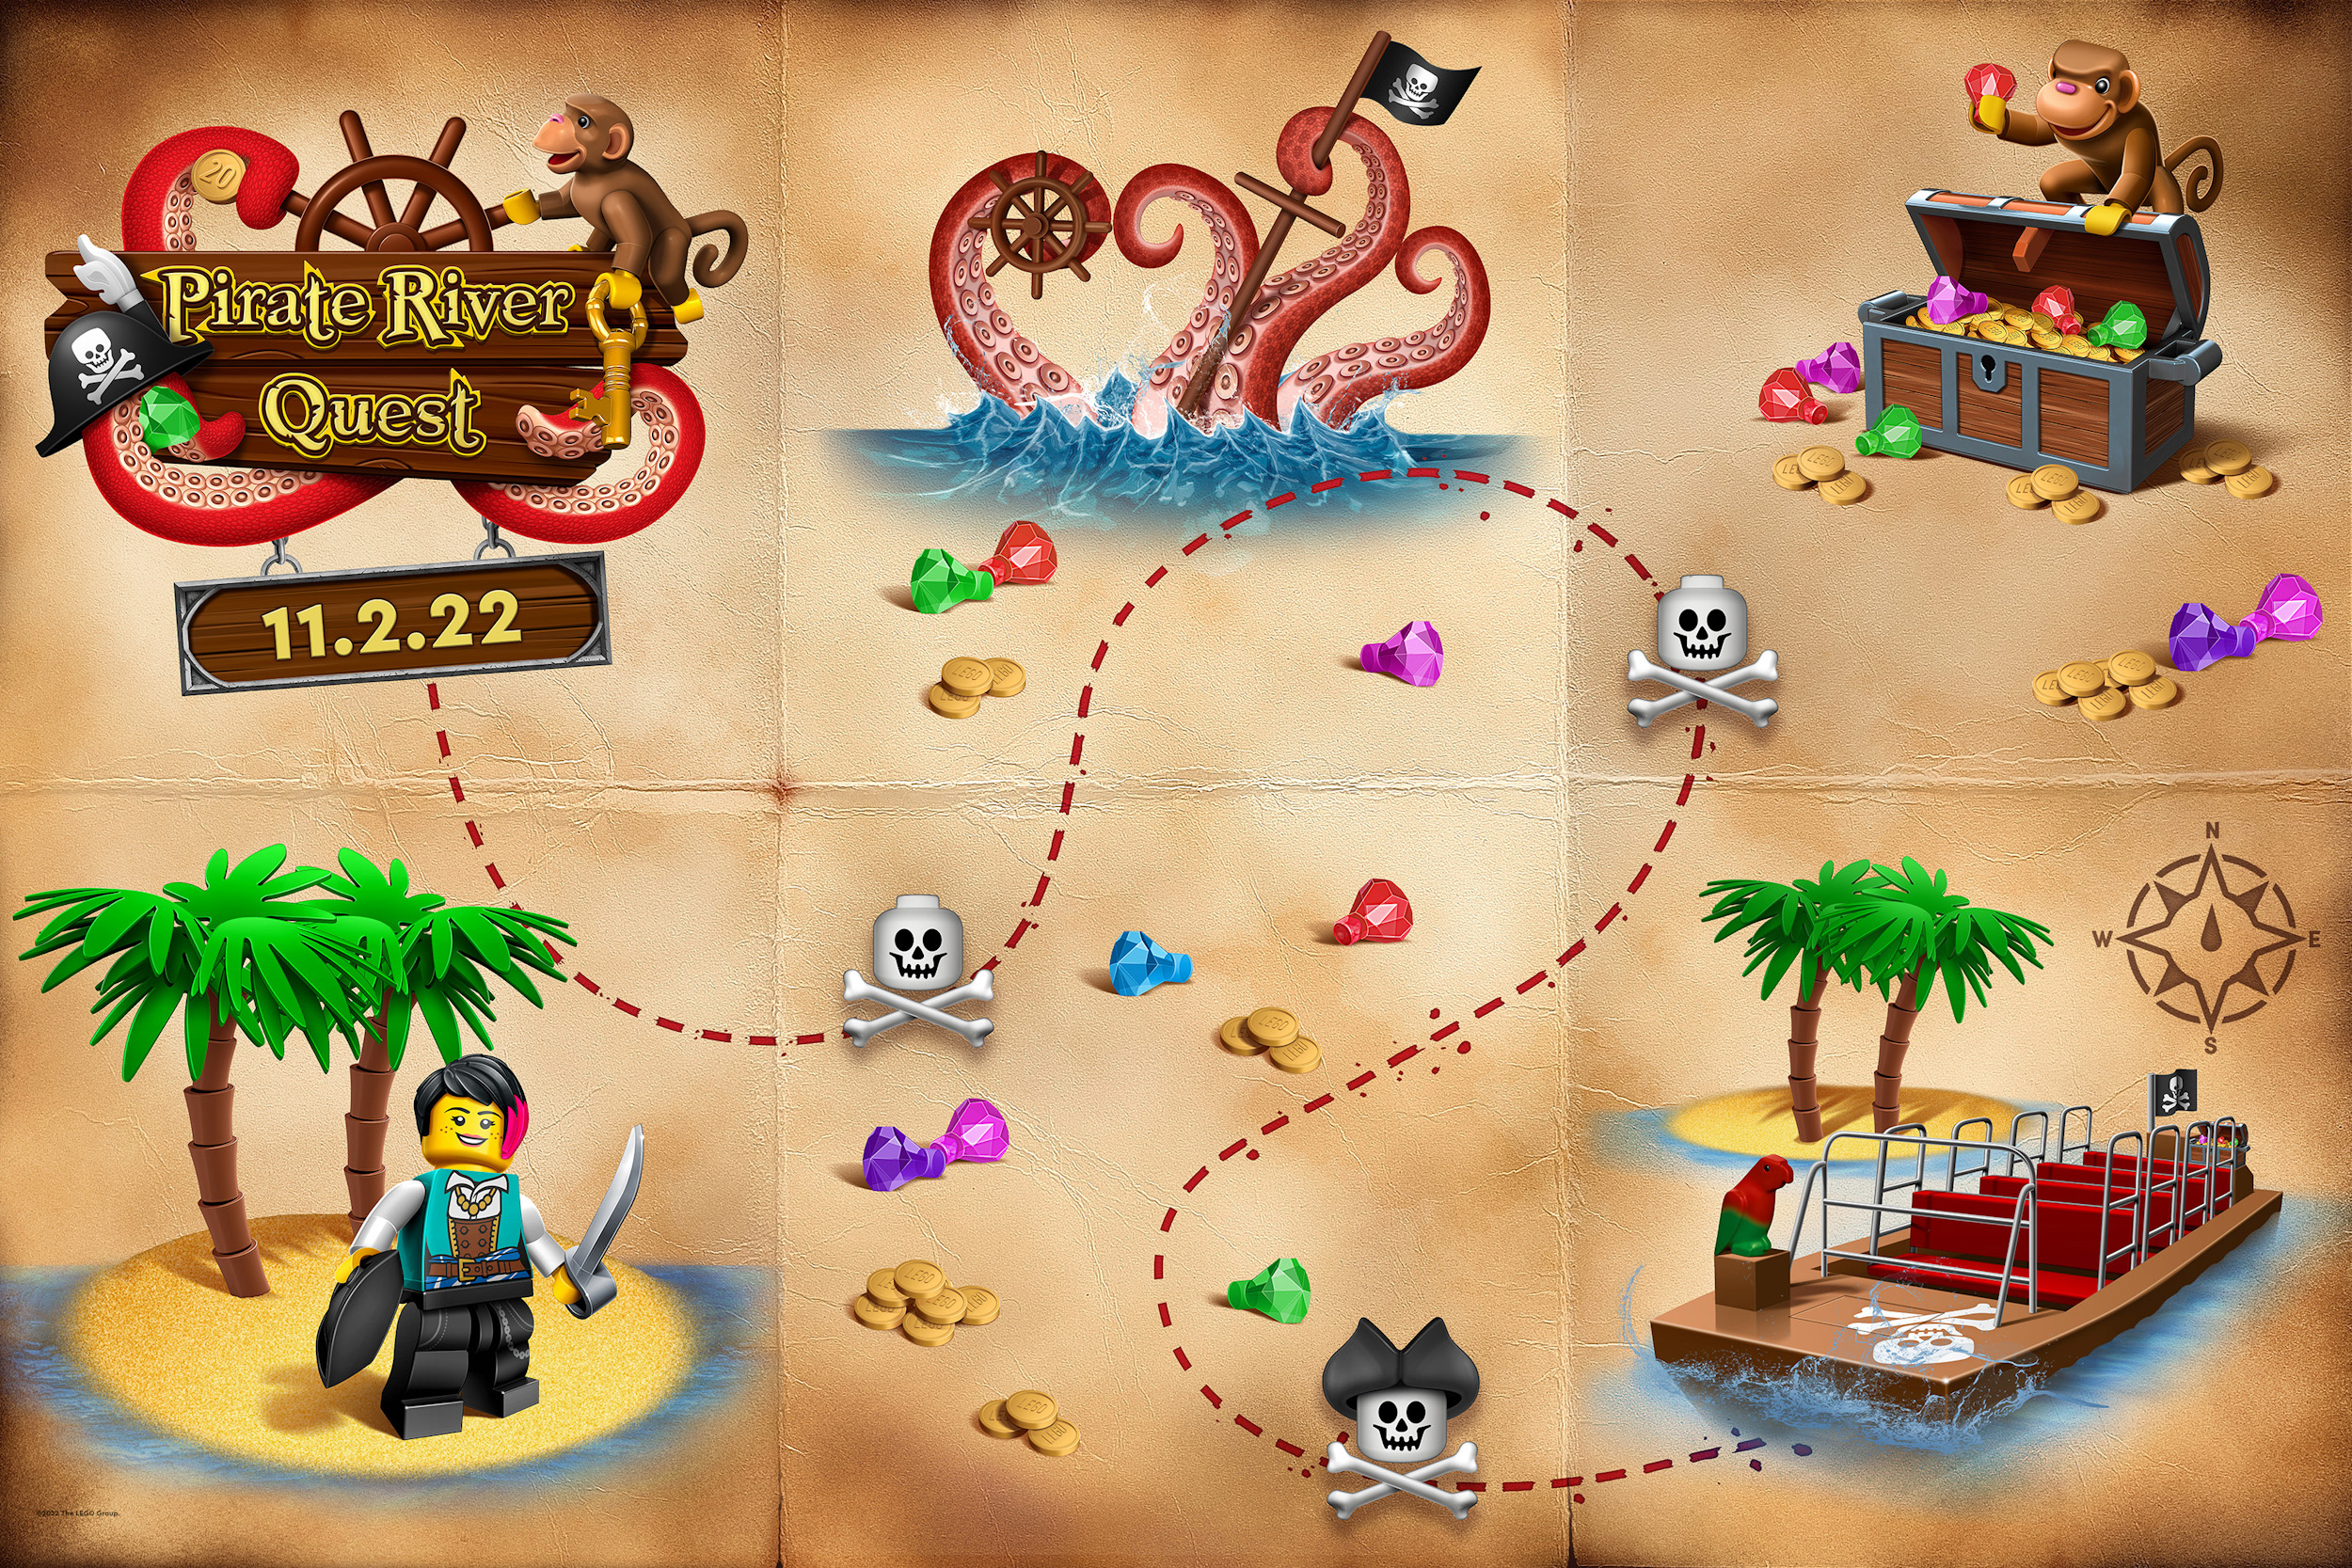 Pirate River Quest opens November 2022